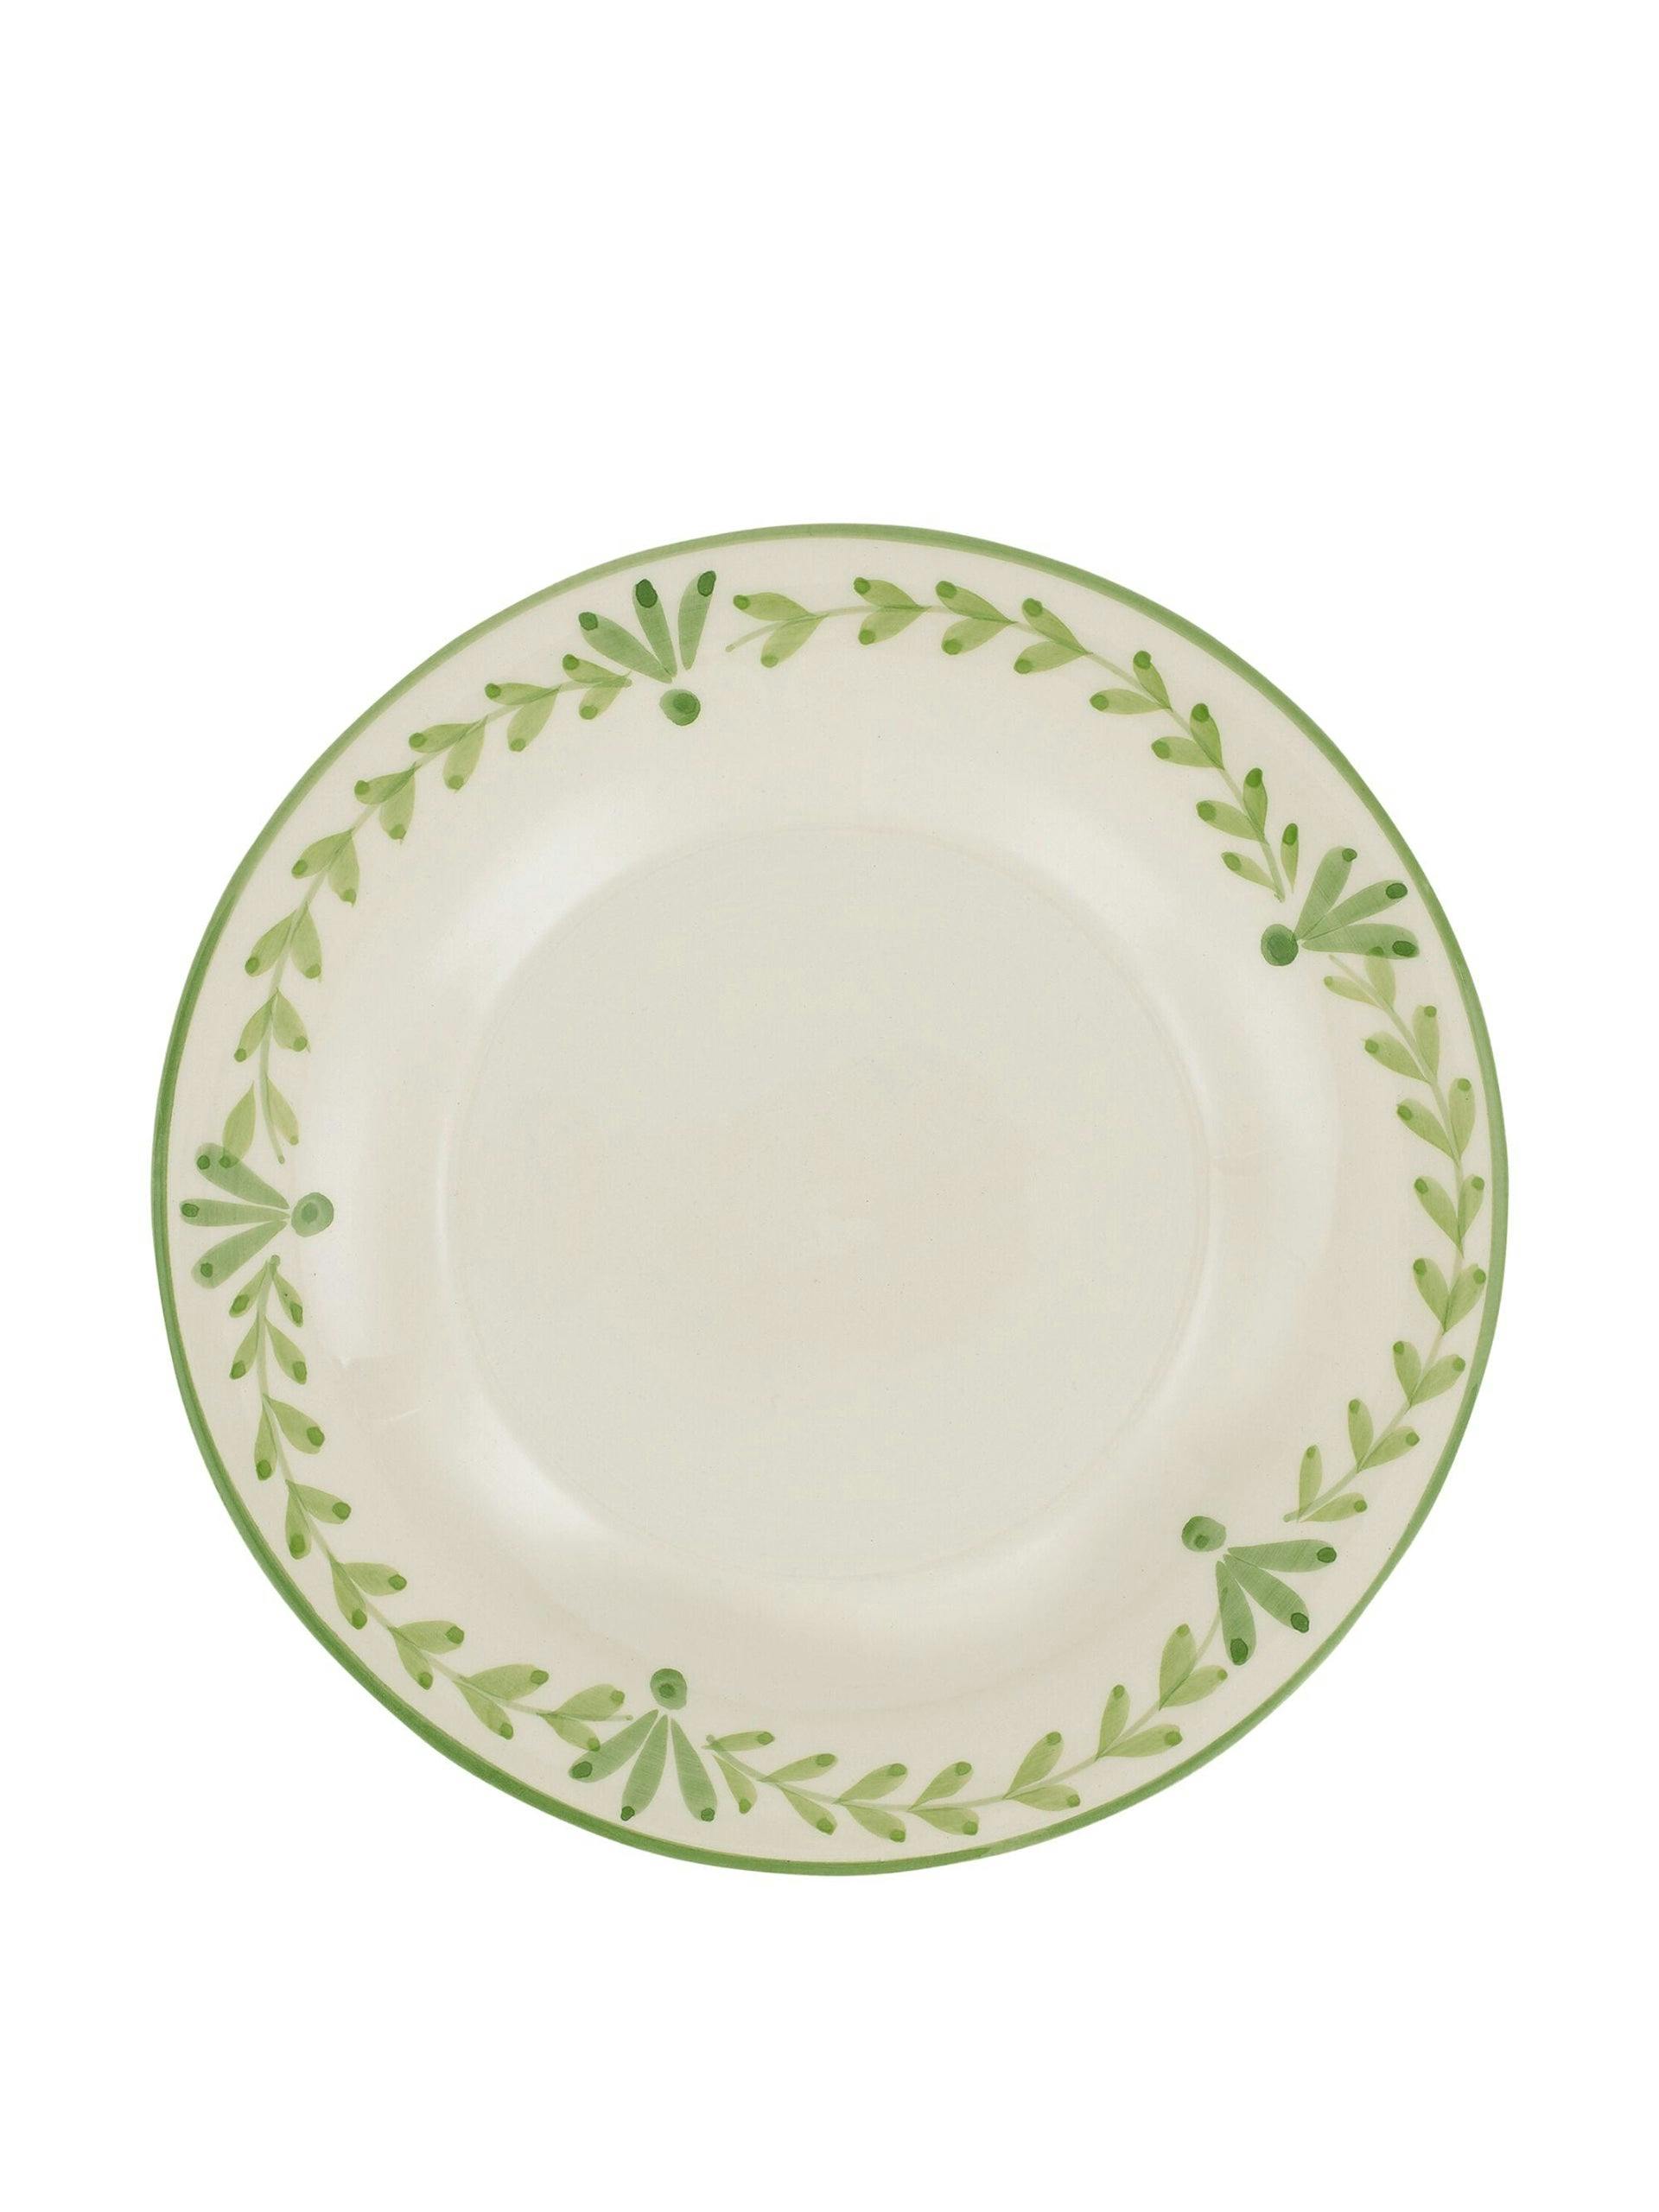 Elouise dessert plate in green